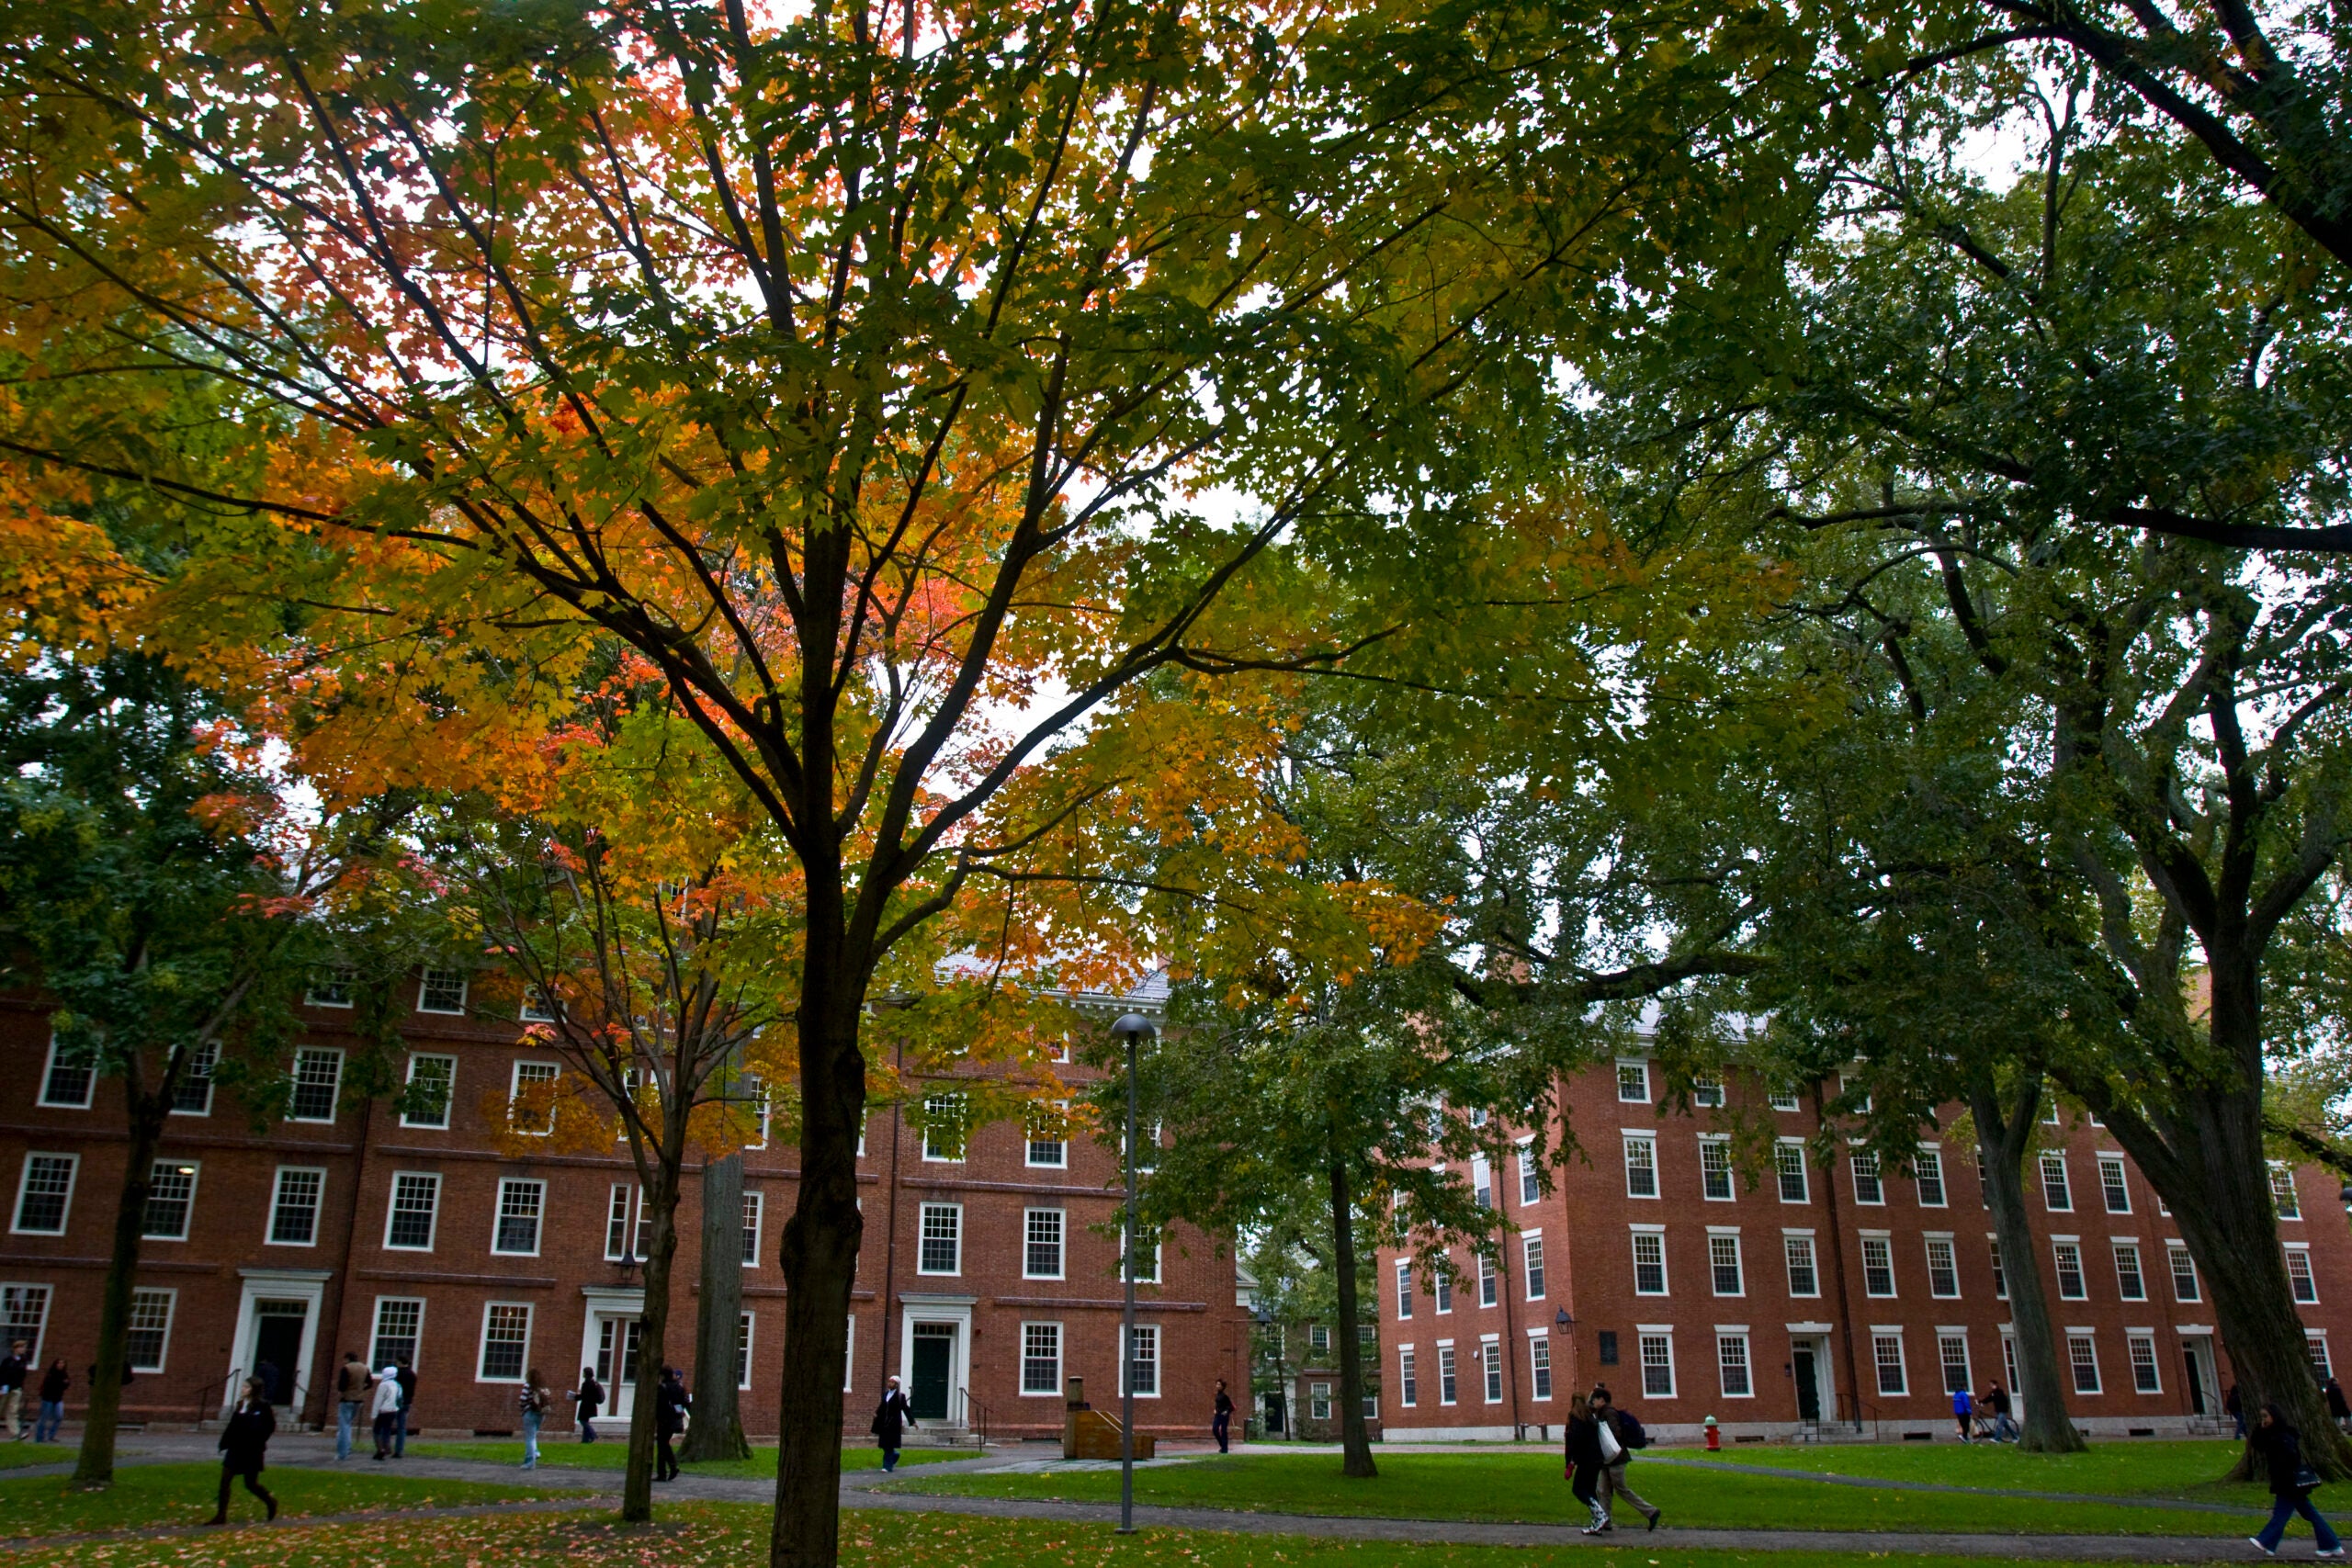 The dorms in Harvard Yard